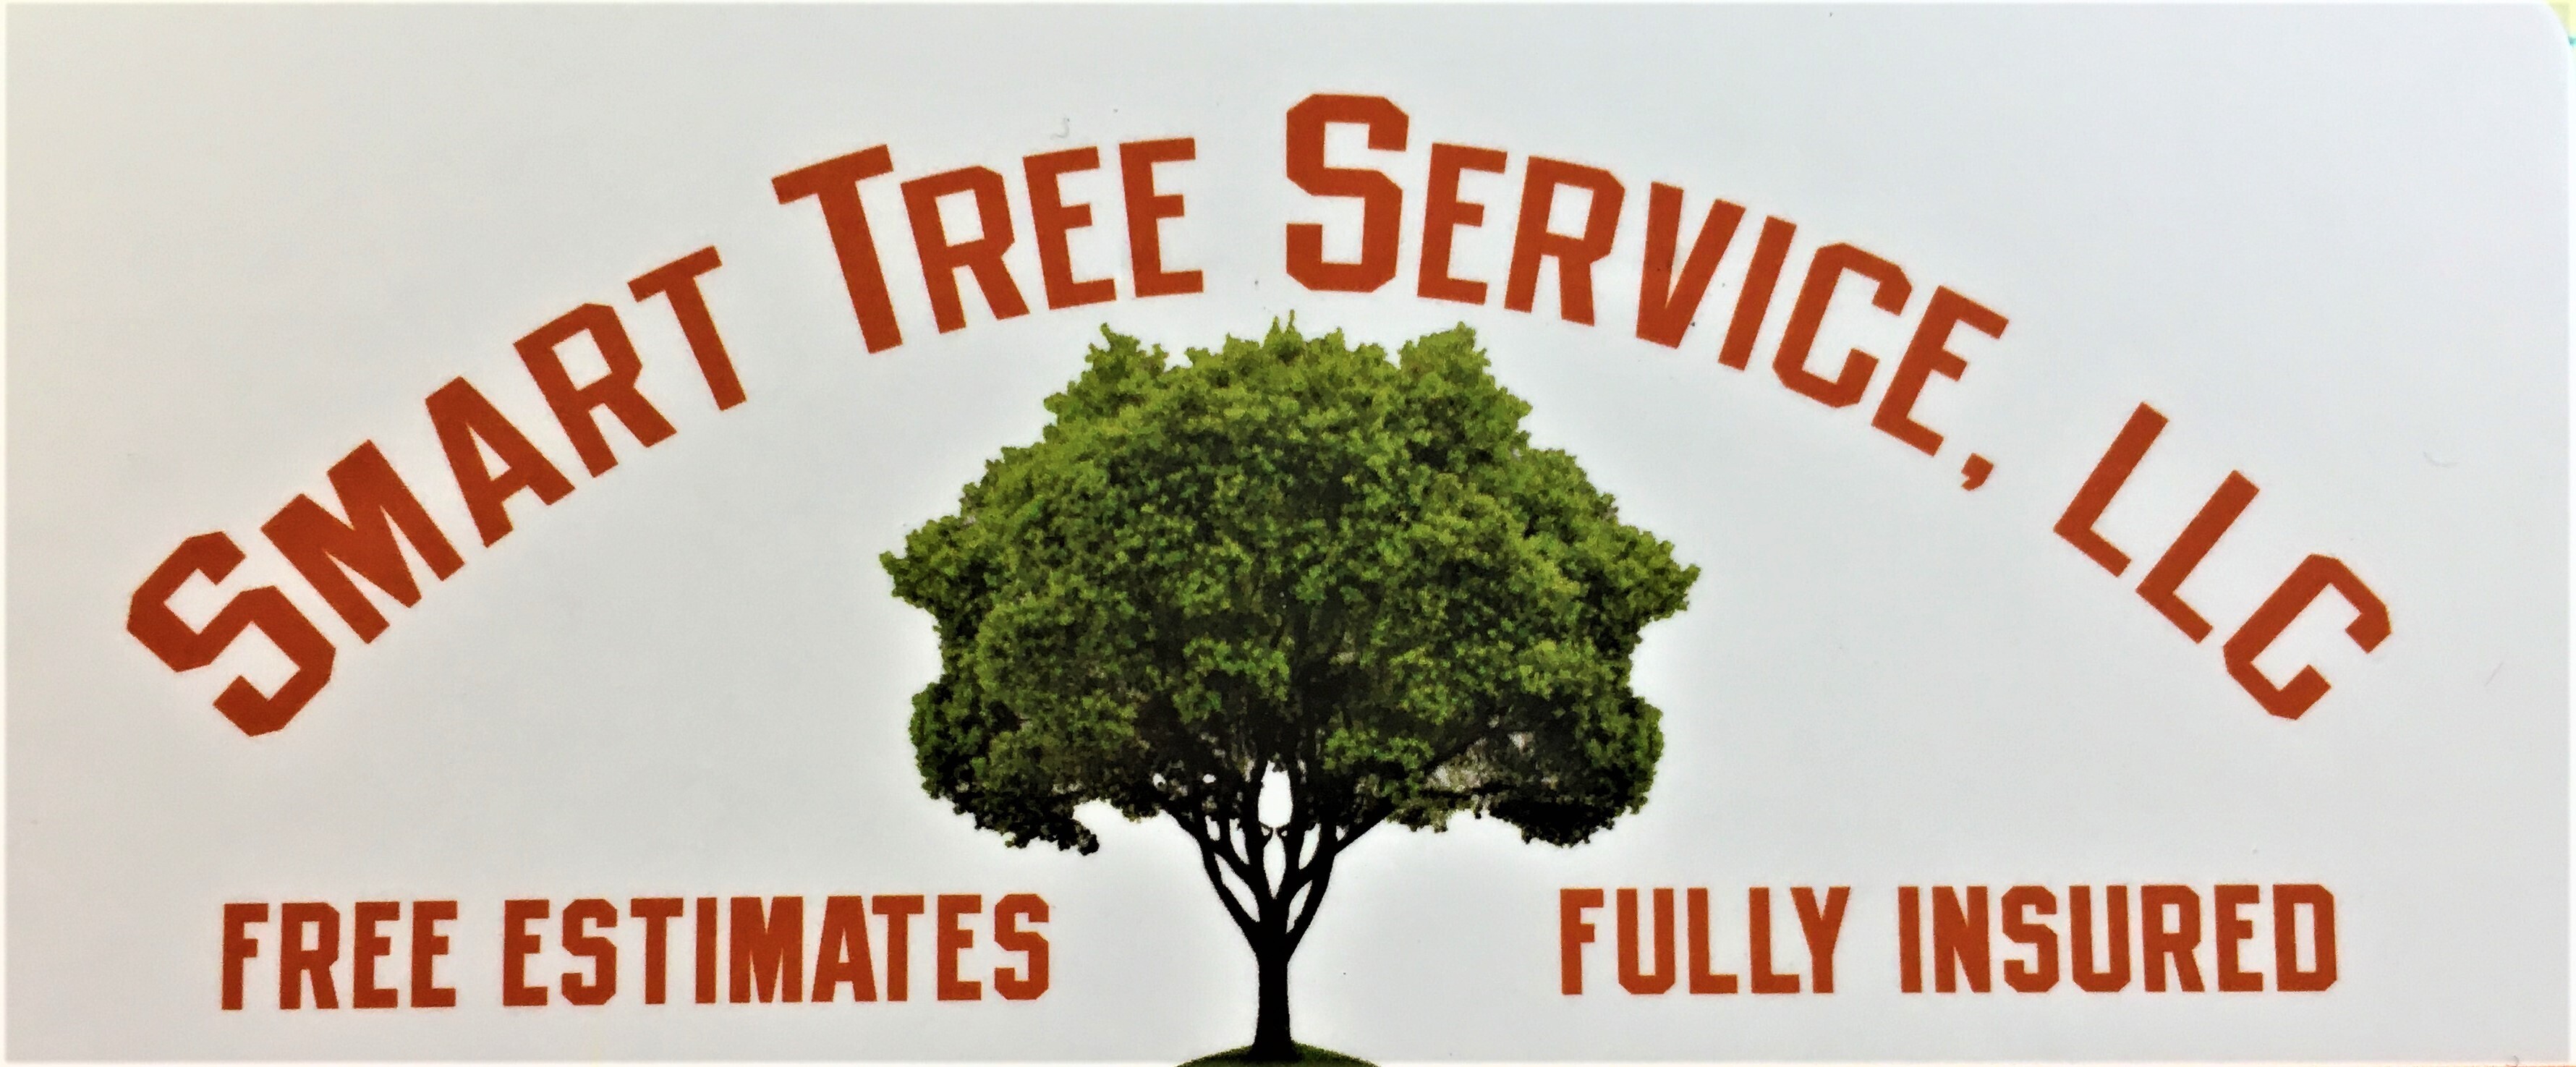 SMART TREE SERVICE, LLC